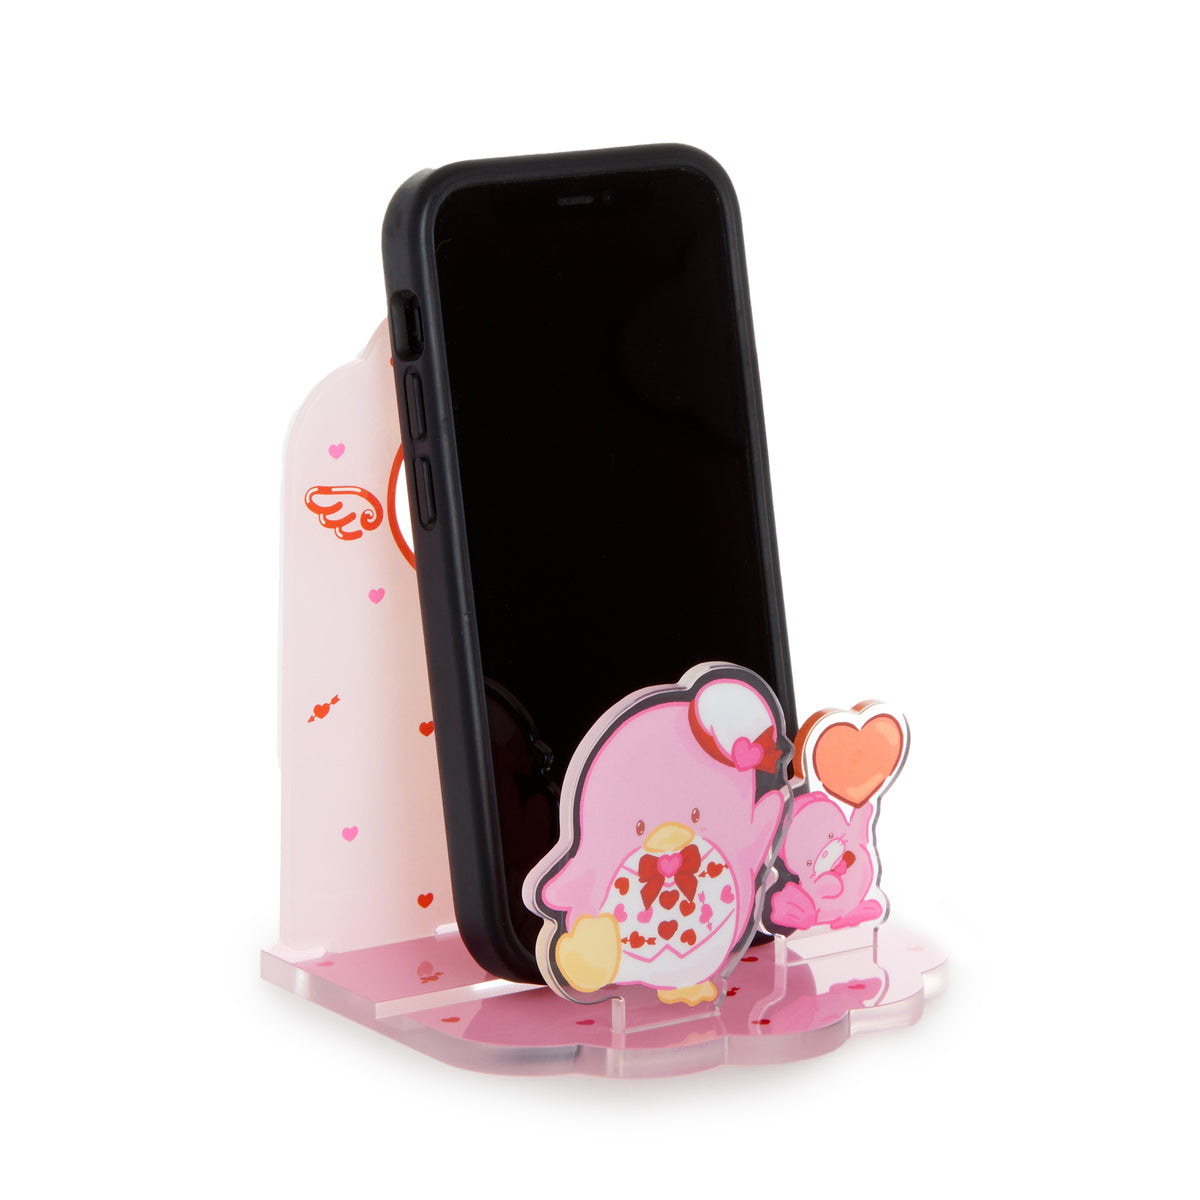 Tuxedosam Smartphone and Photo Stand (Cupid Series) Home Goods Japan Original   